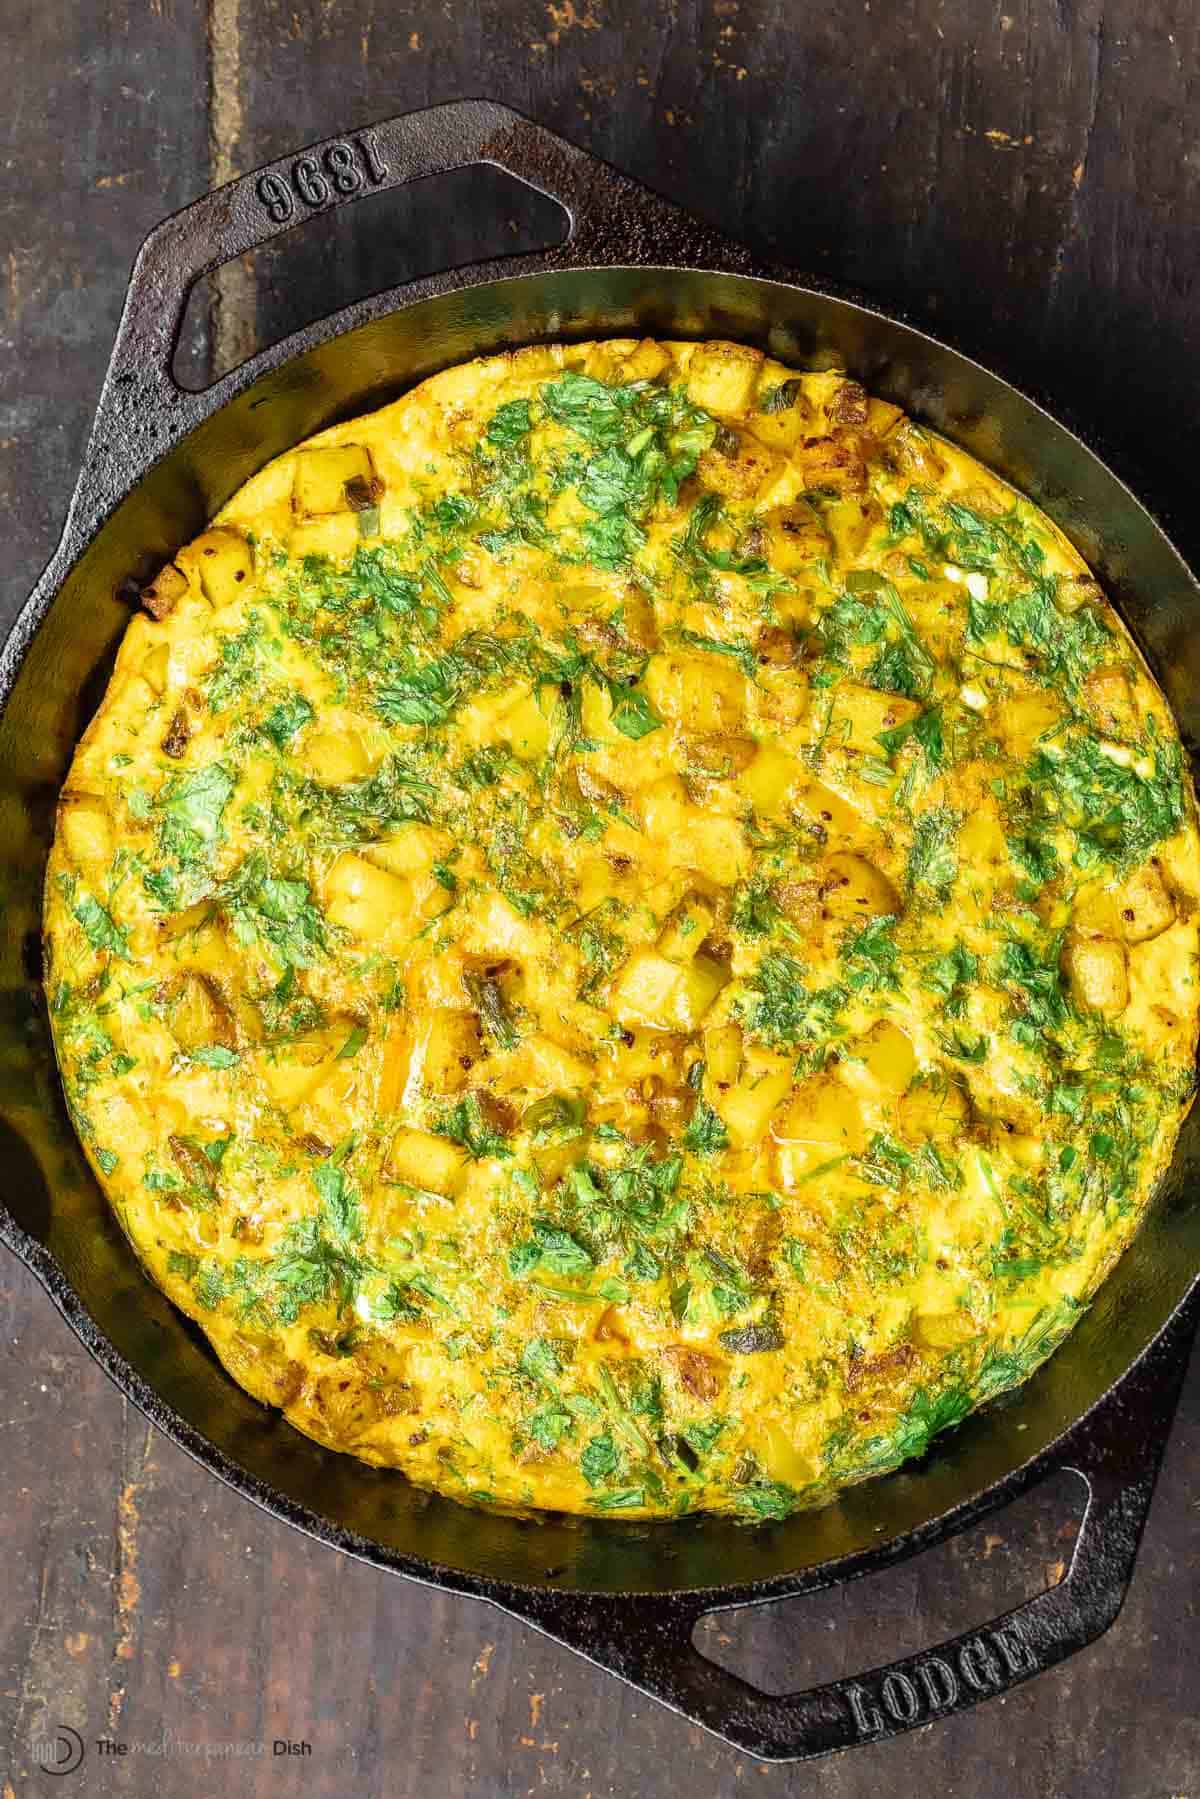 https://www.themediterraneandish.com/wp-content/uploads/2022/02/potato-omelette-recipe-5.jpg